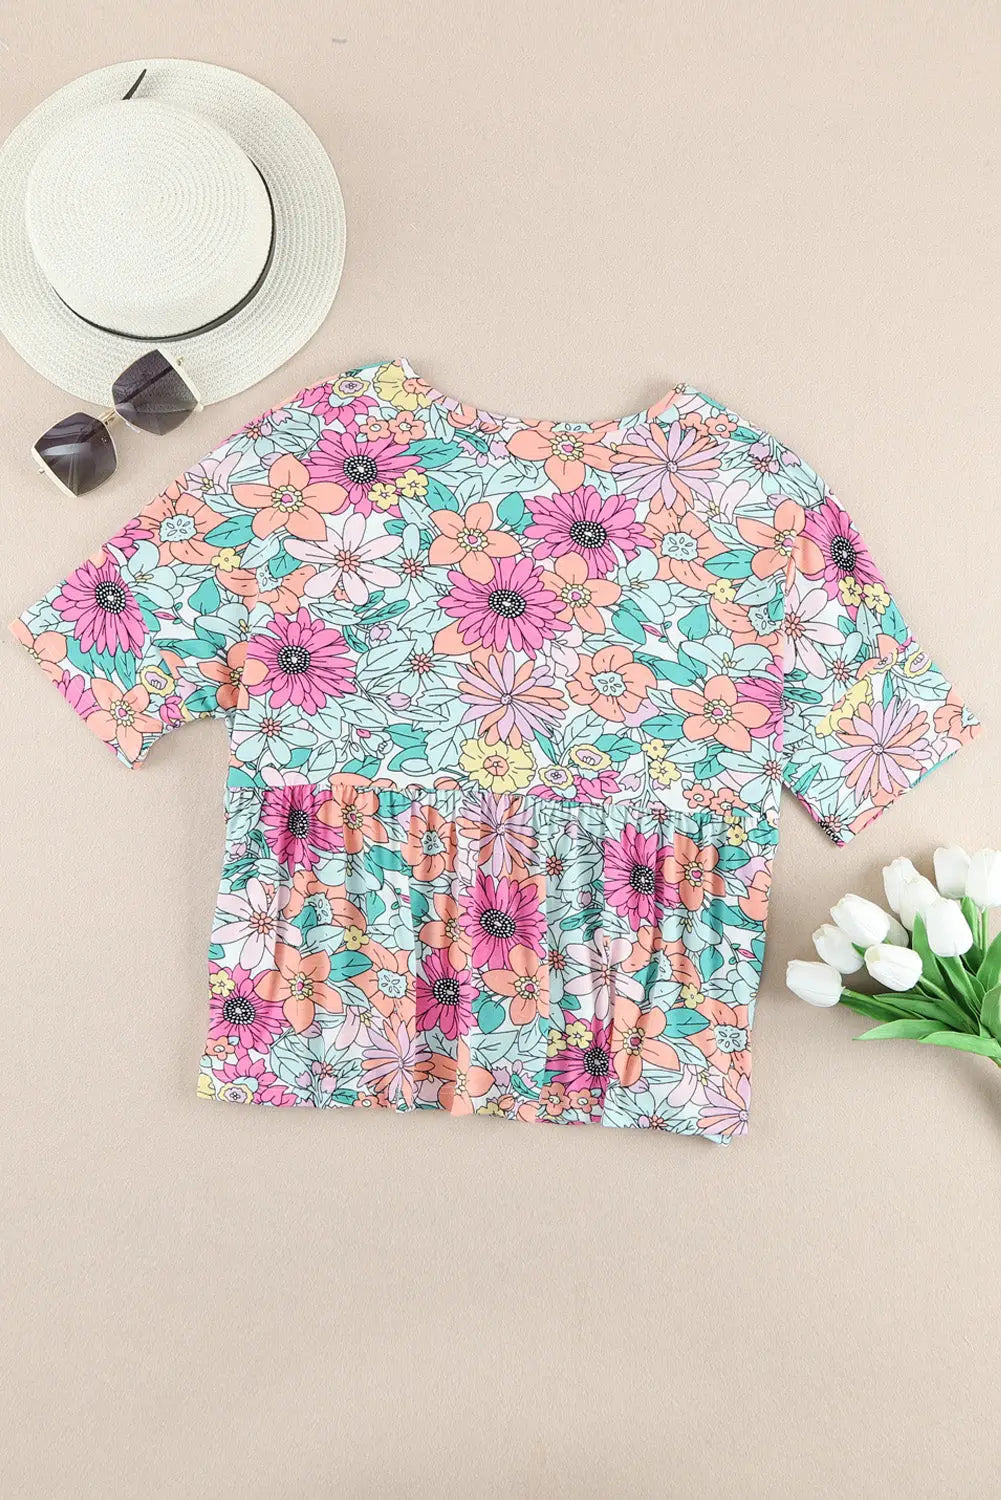 Multicolor vibrant summer floral print spaghetti strap jumpsuit - jumpsuits & rompers